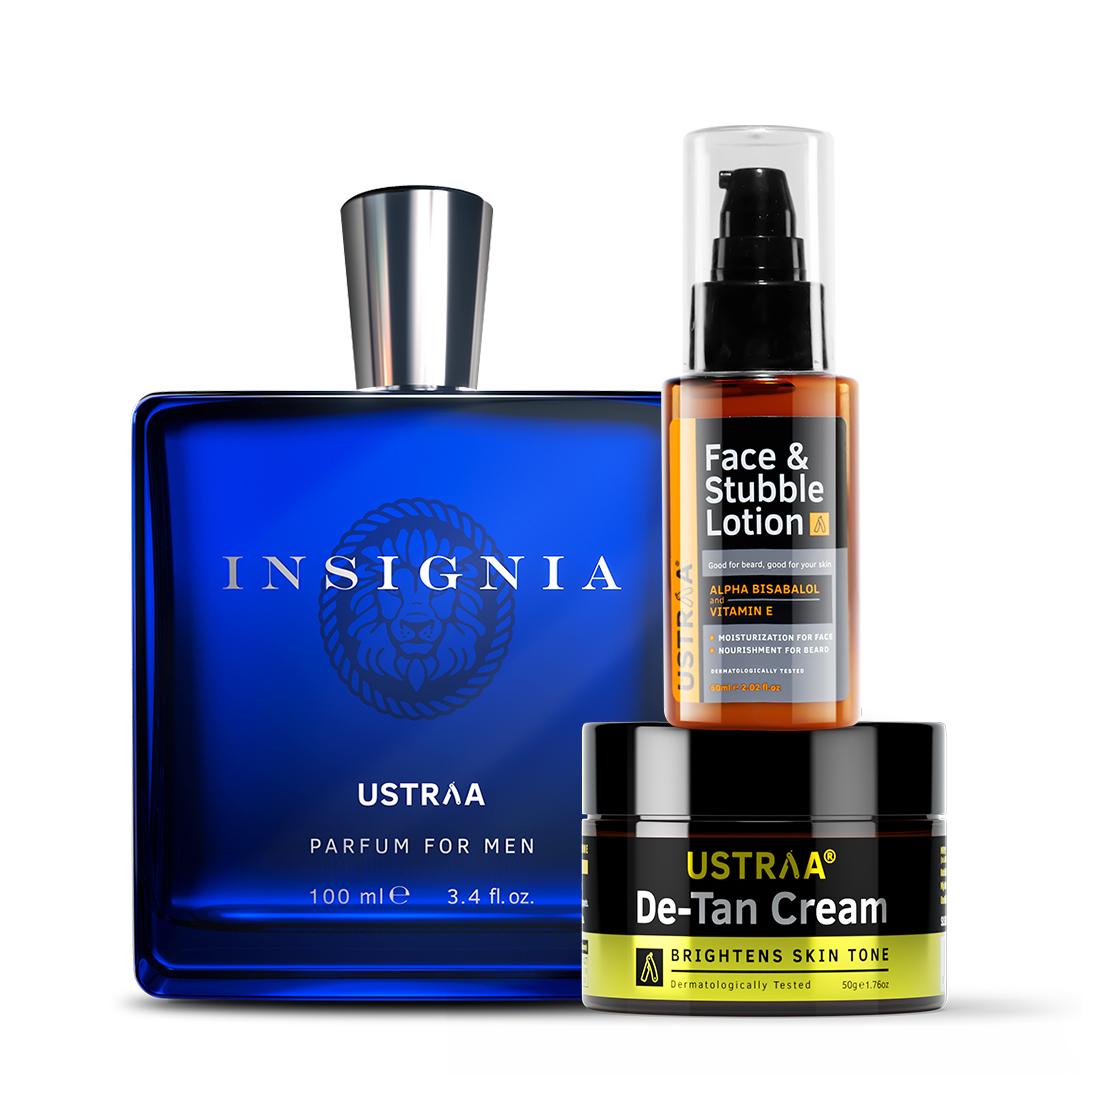 Ustraa Insignia Perfume & Face & Stubble Lotion & De Tan Cream